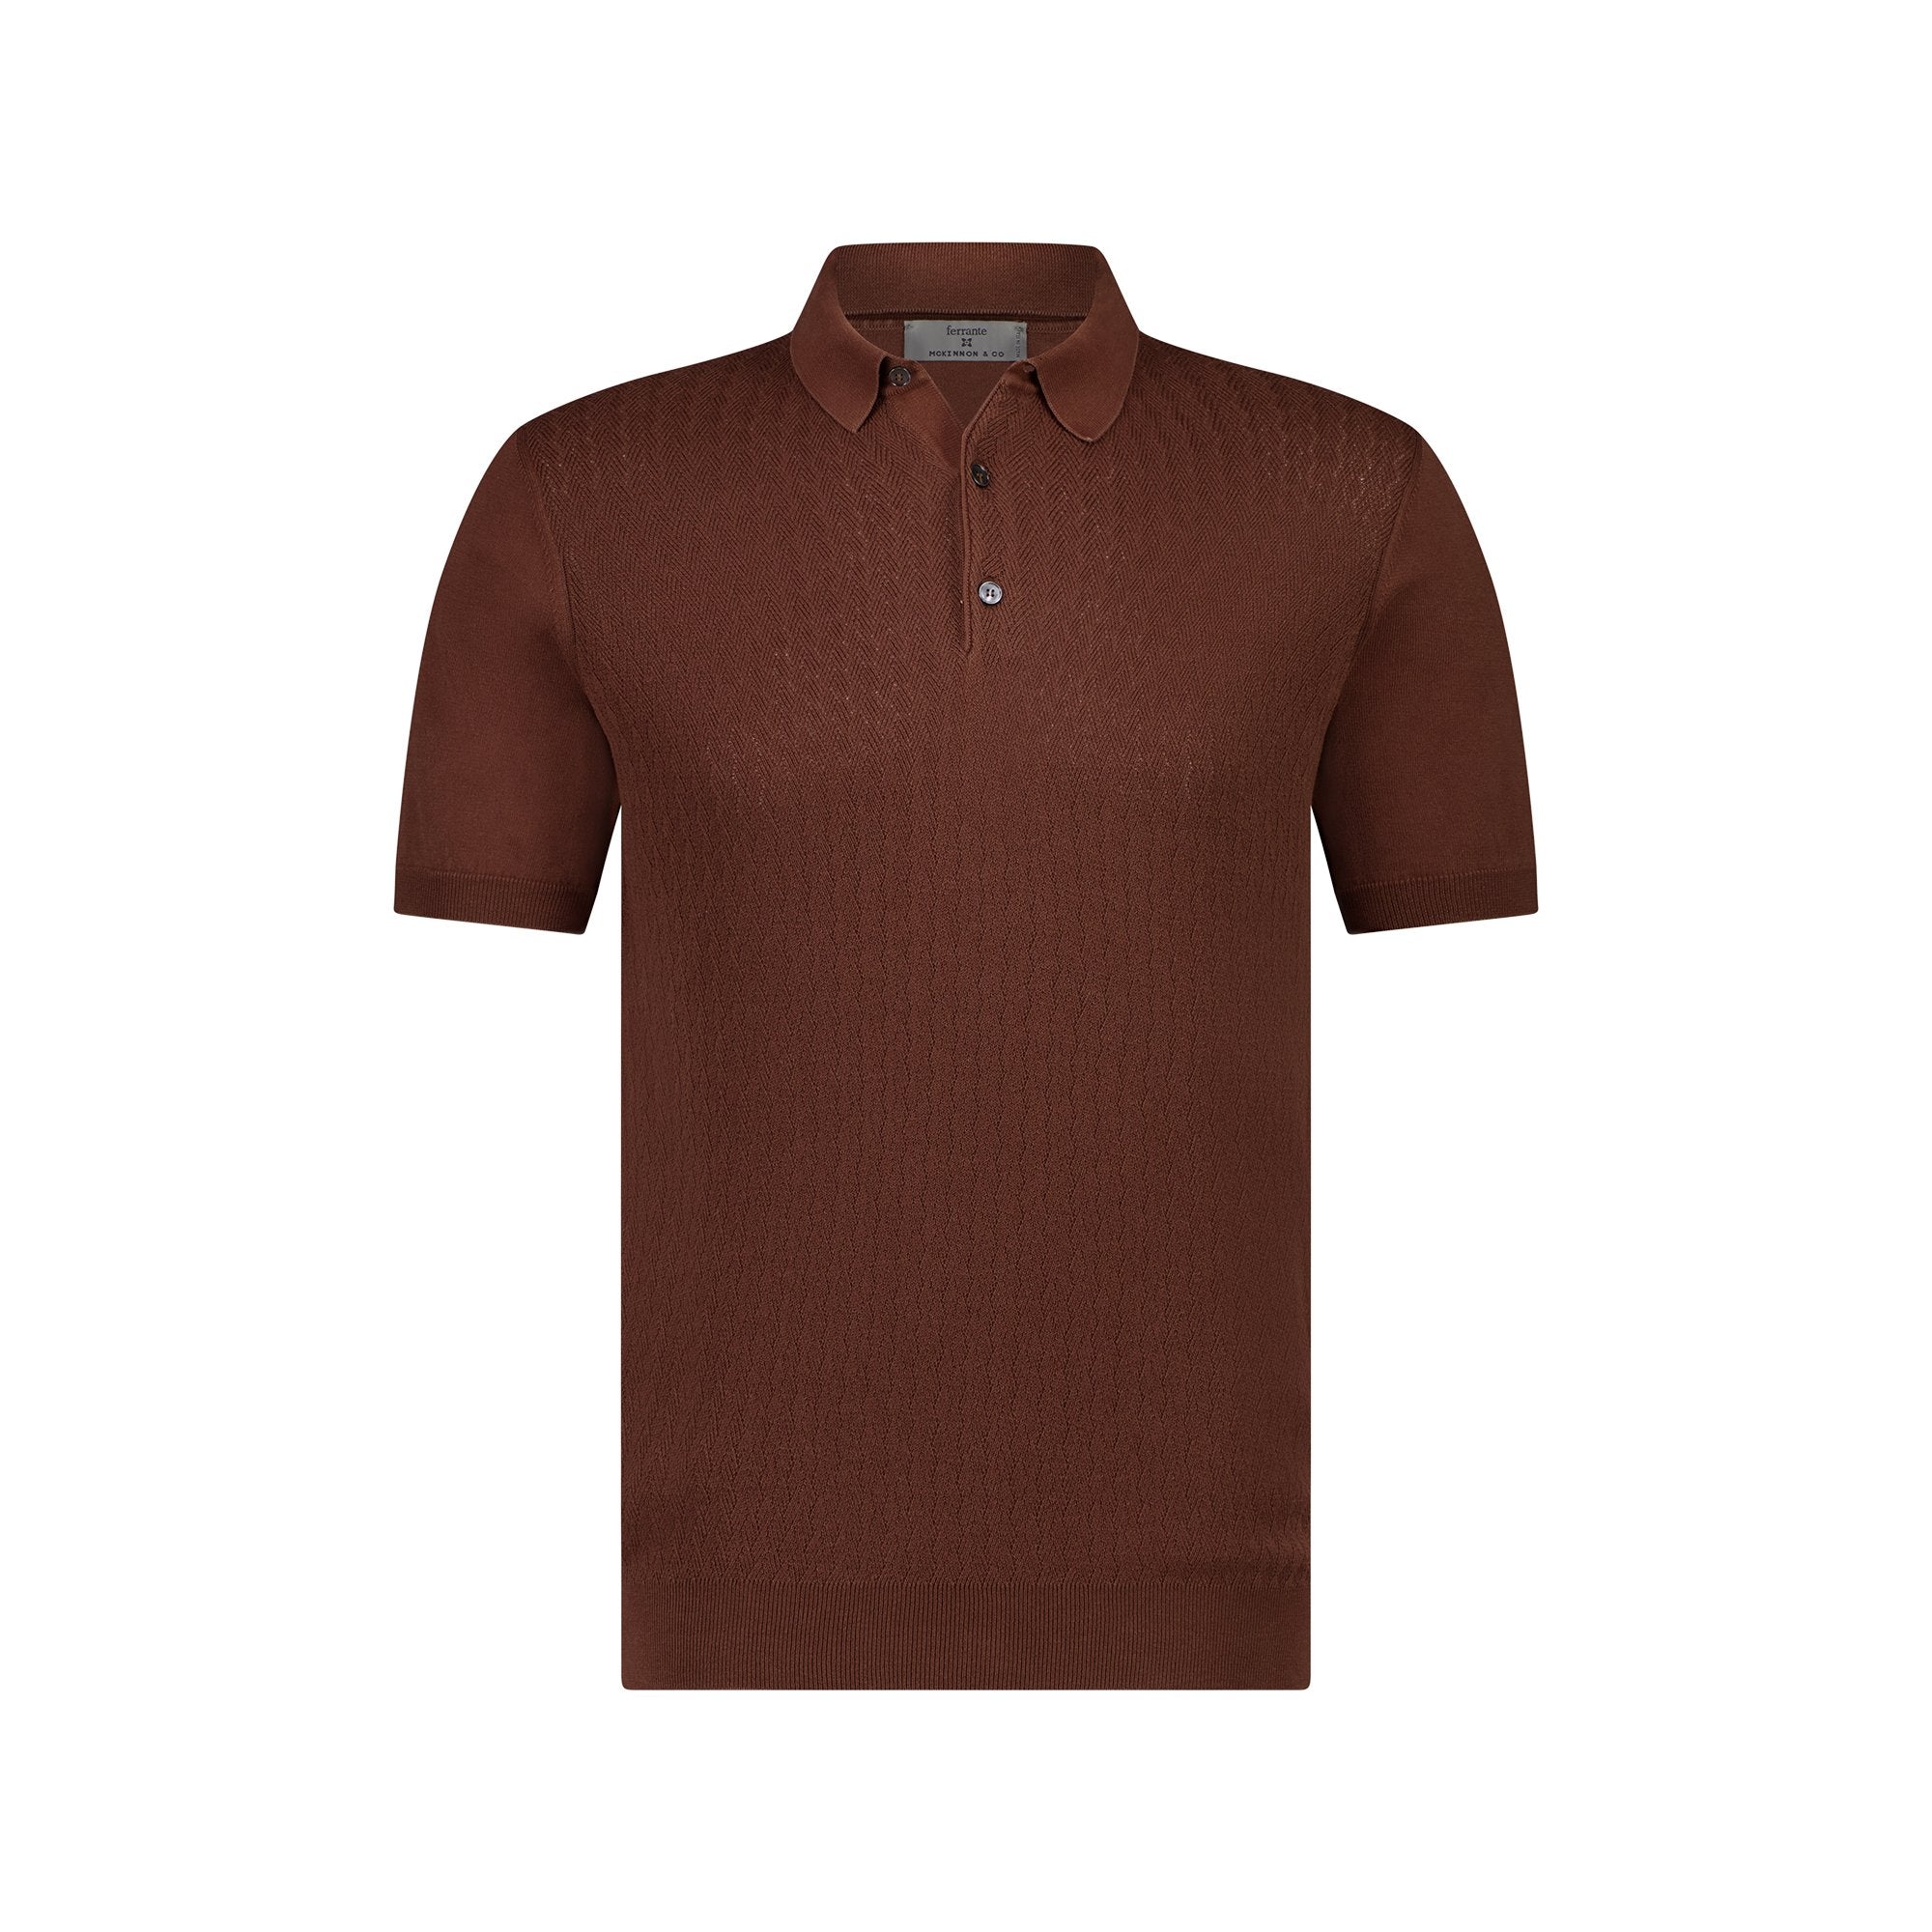 MCKINNON x FERRANTE Short Sleeve Polo in BROWN - Henry BucksShirts38SS230077 - BROWN - 50